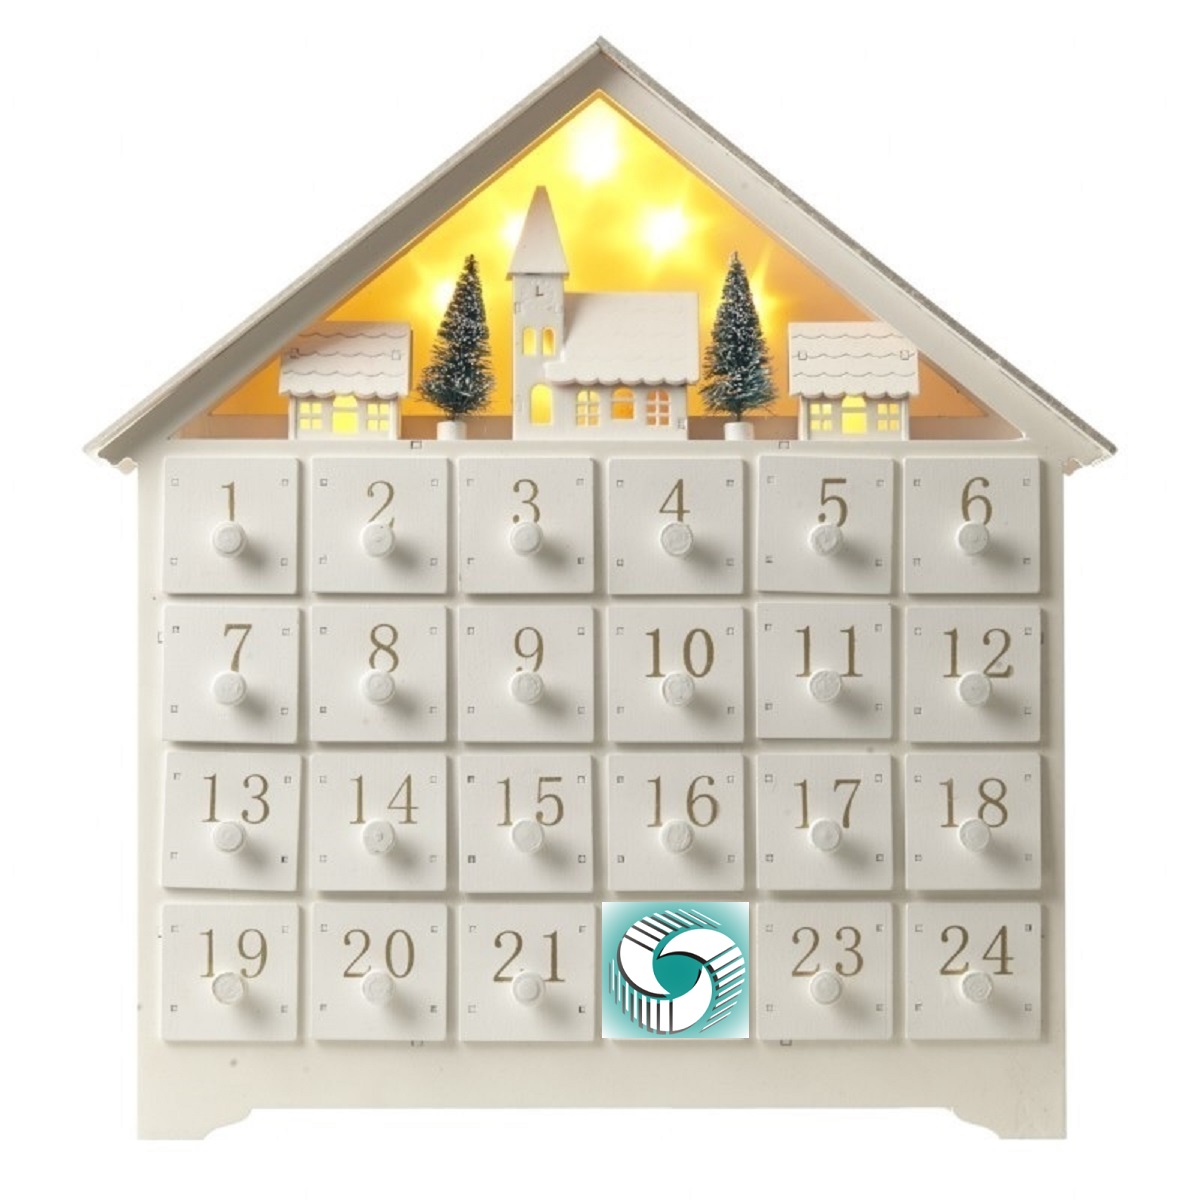 Day 22 – Frontier’s Advent Calendar